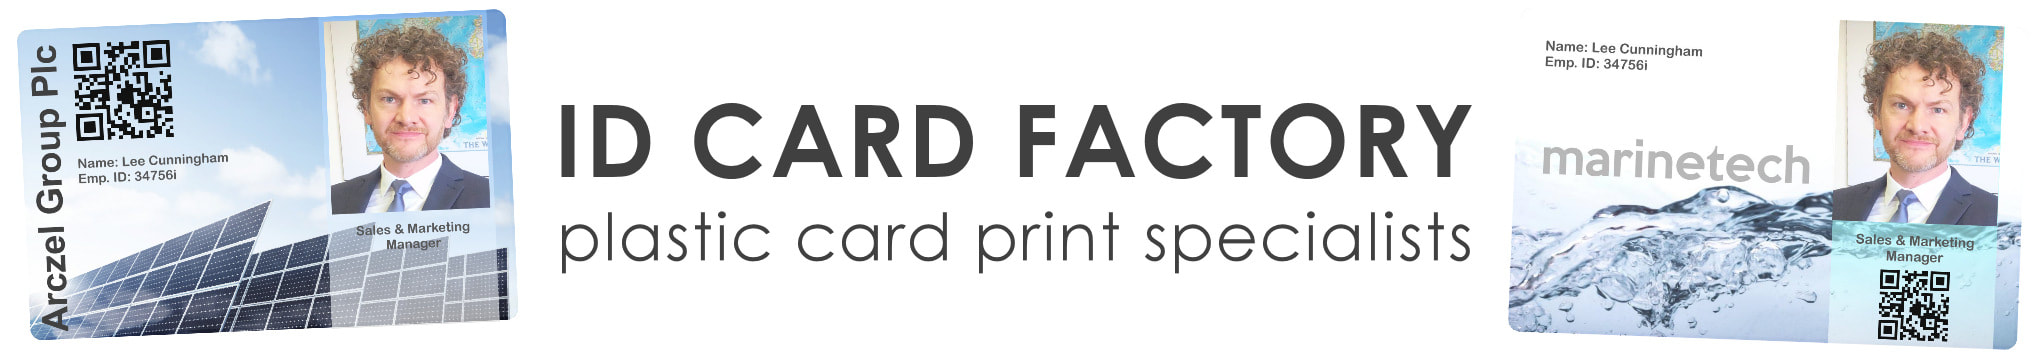 Middlesbrough custom employee ID card printing | staff photo ID cards | company ID card printing service near local close near to 